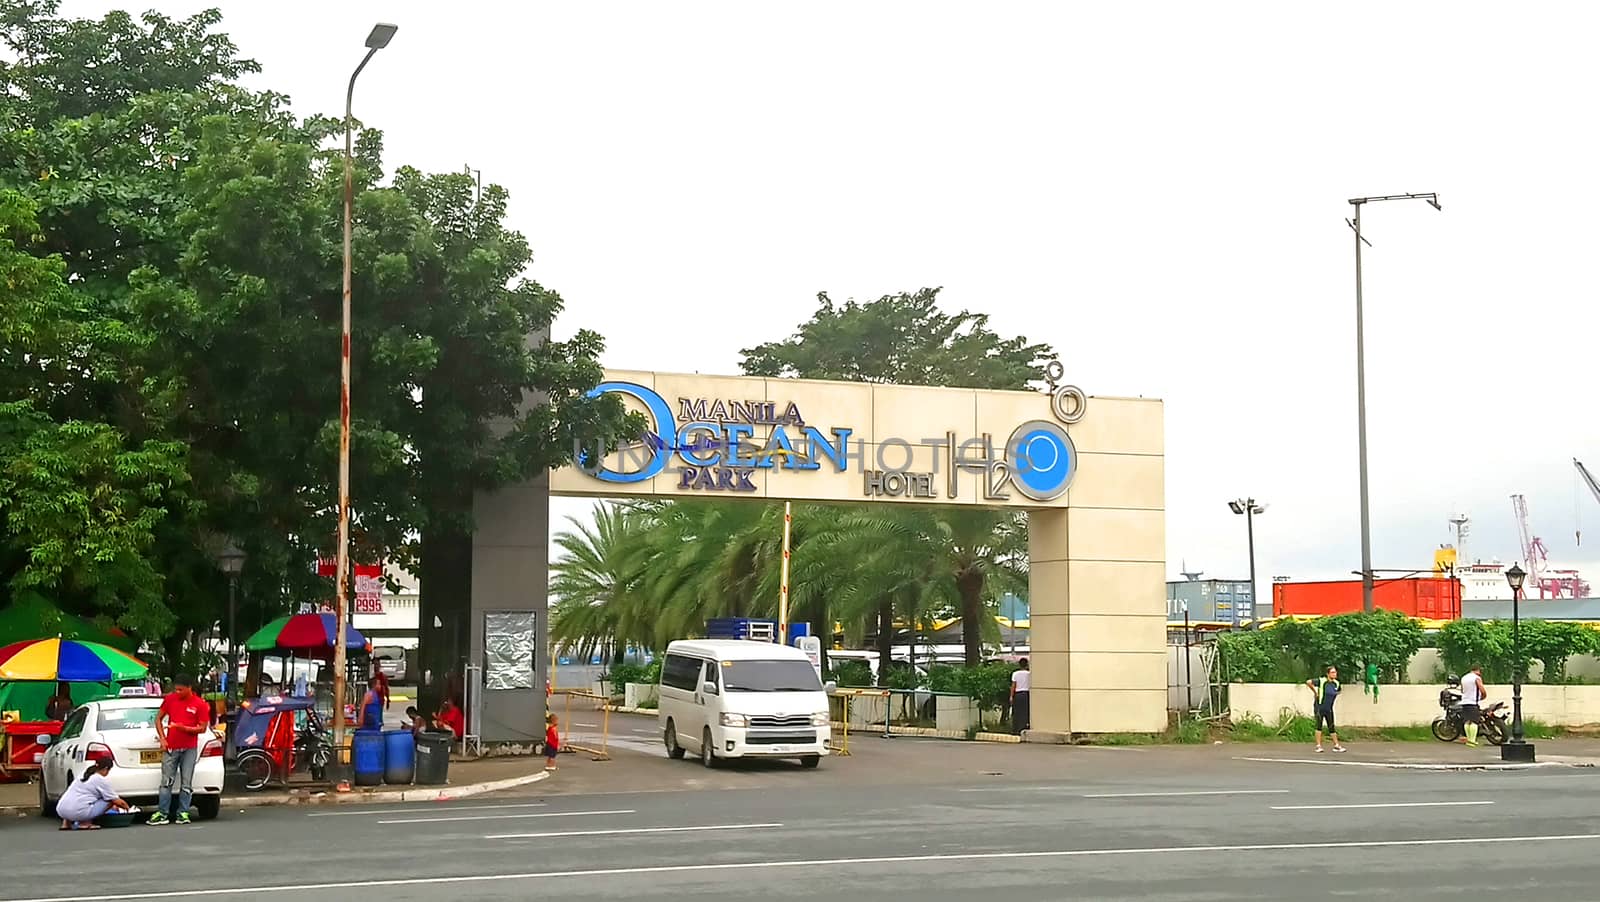 Manila ocean park entrance arch in Manila, Philippines by imwaltersy